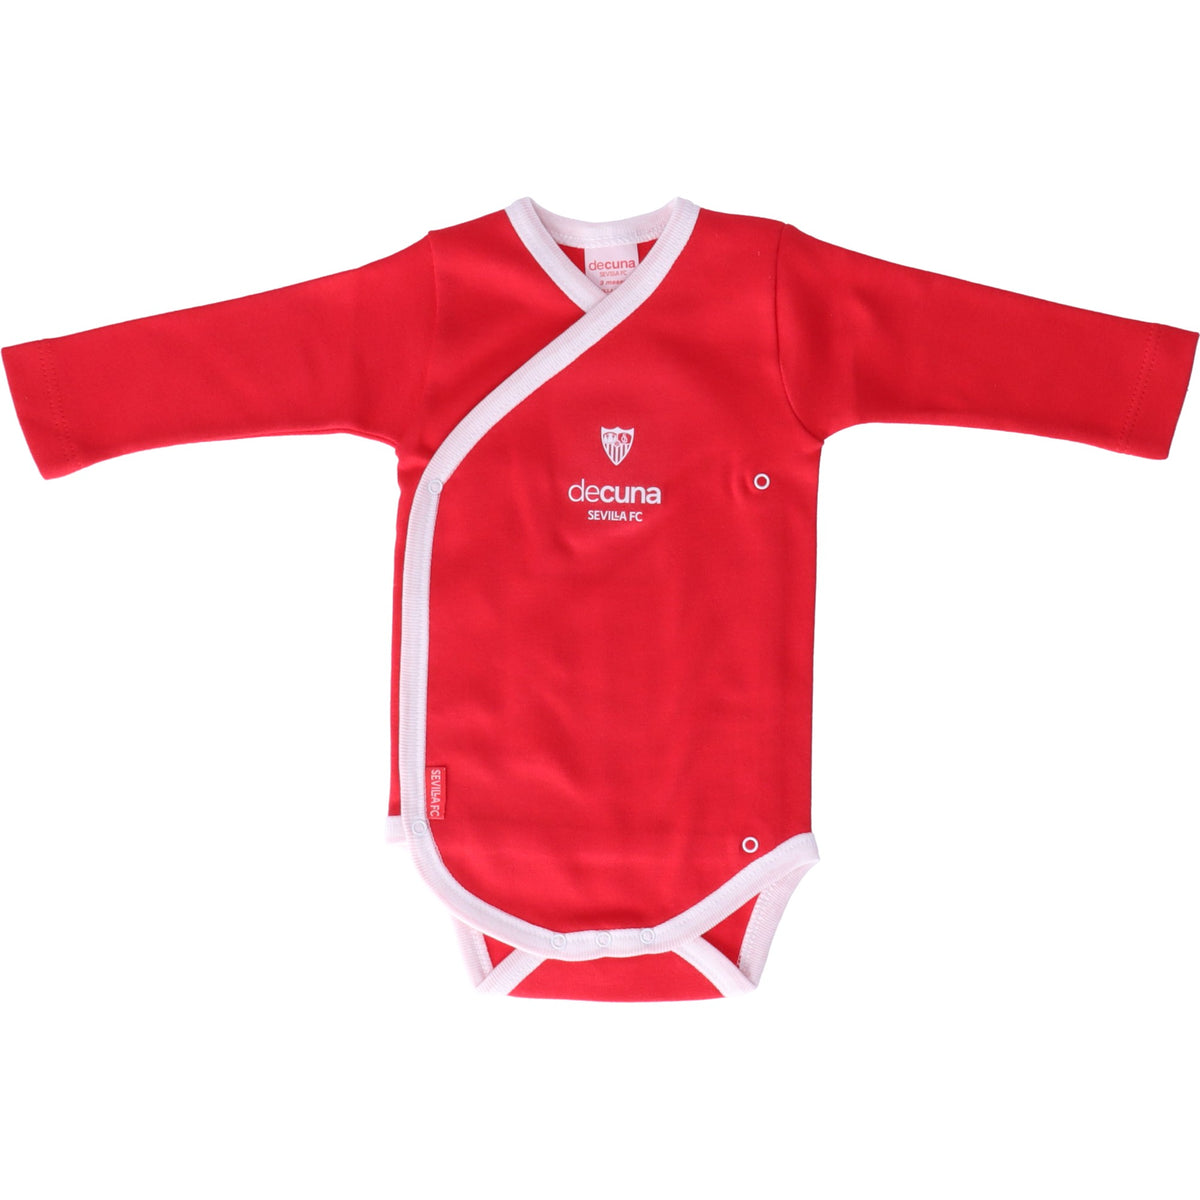 Red 'decuna' baby bodysuit